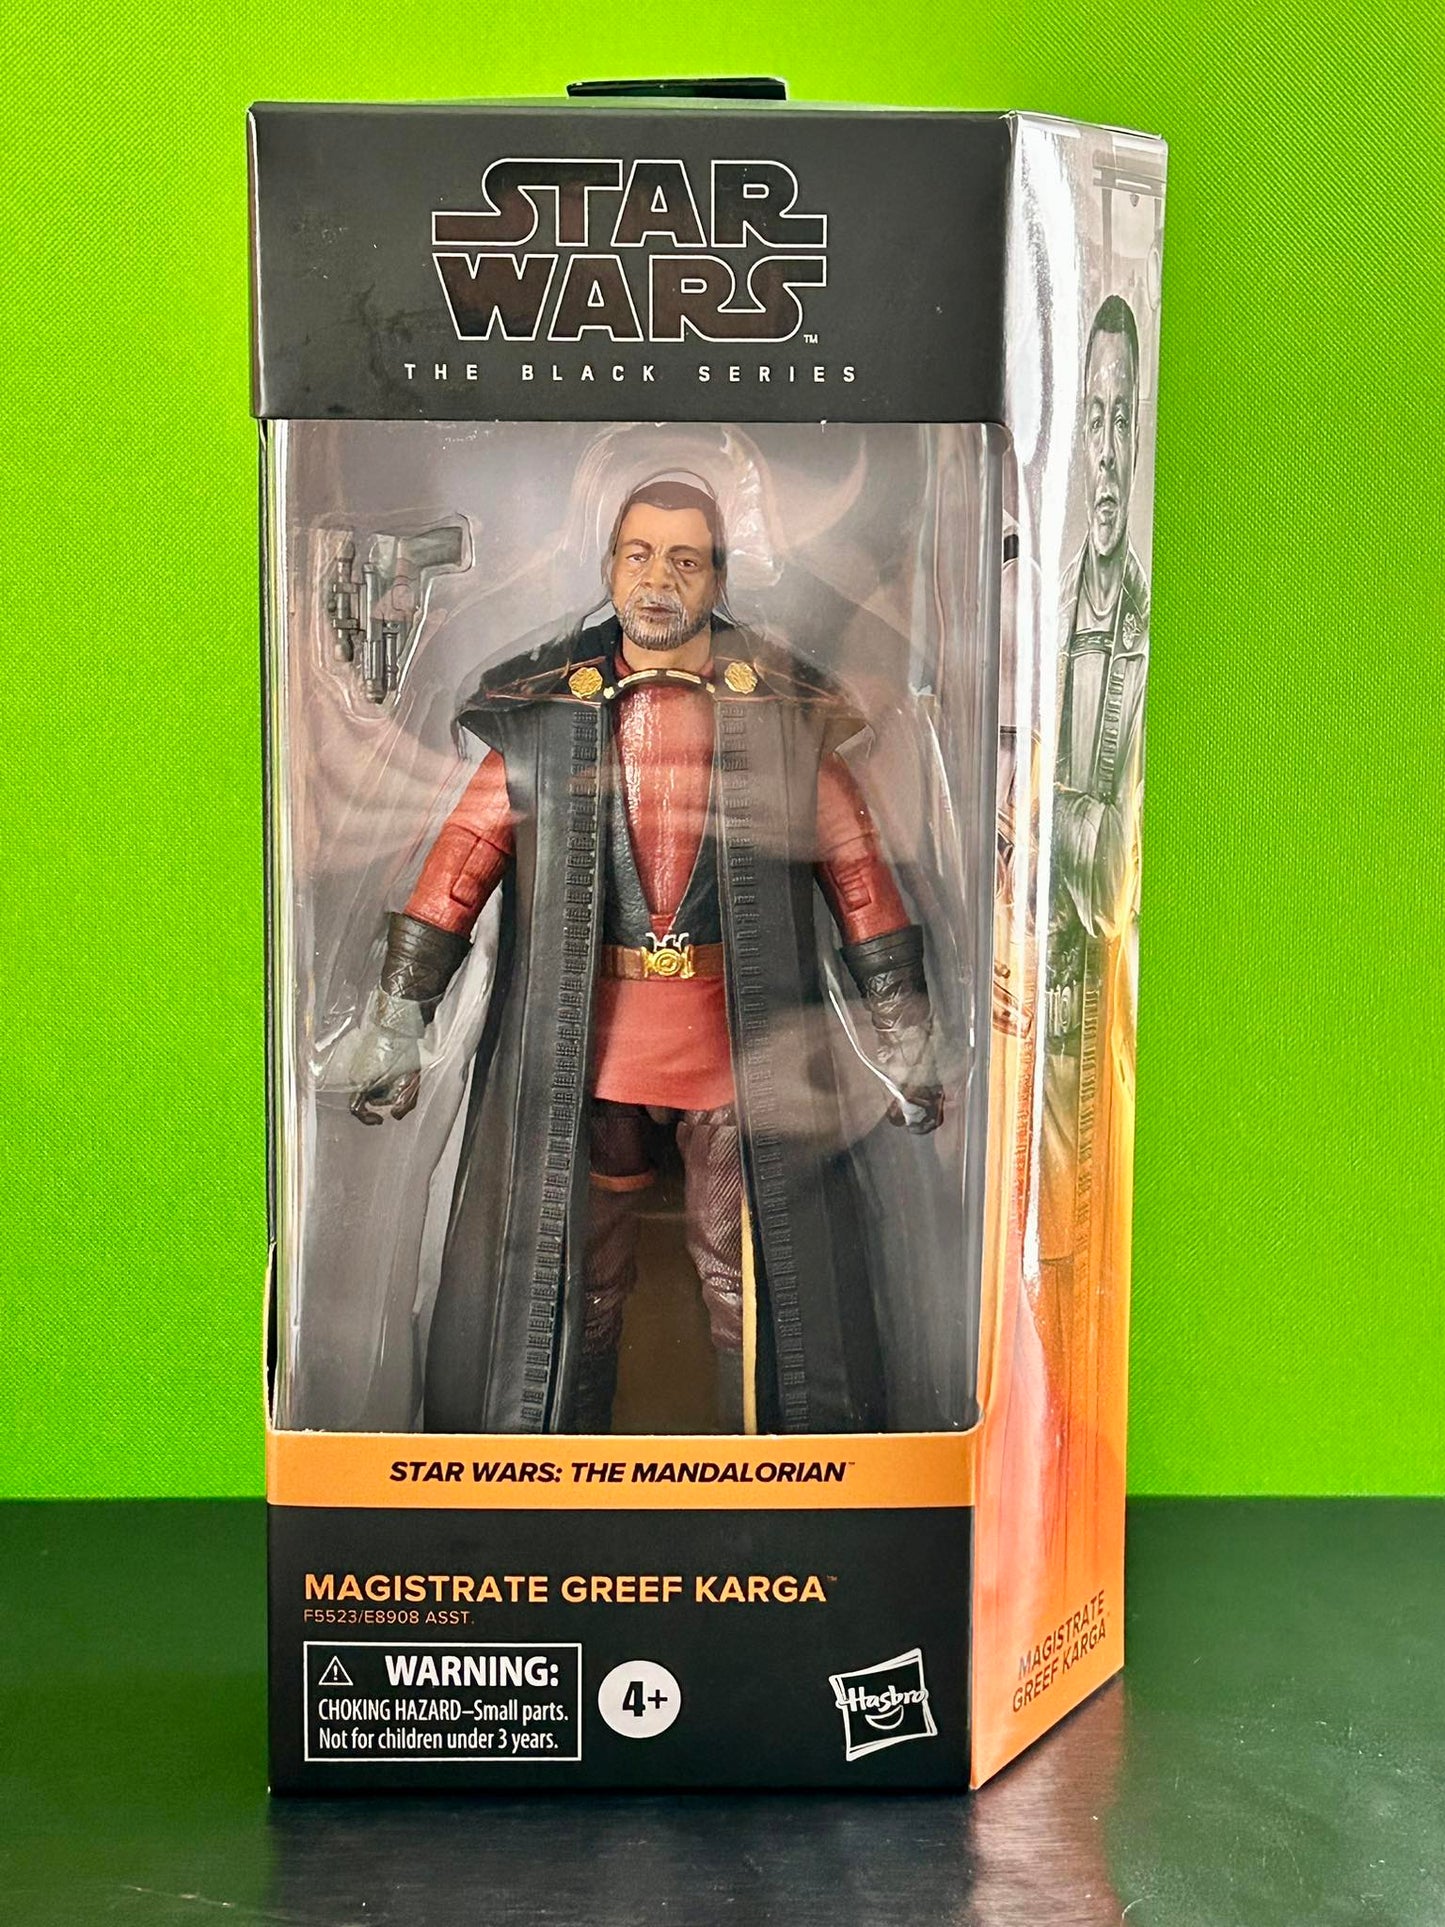 Star Wars The Black Series - Magistrate Greef Karga 15cm Action Figure